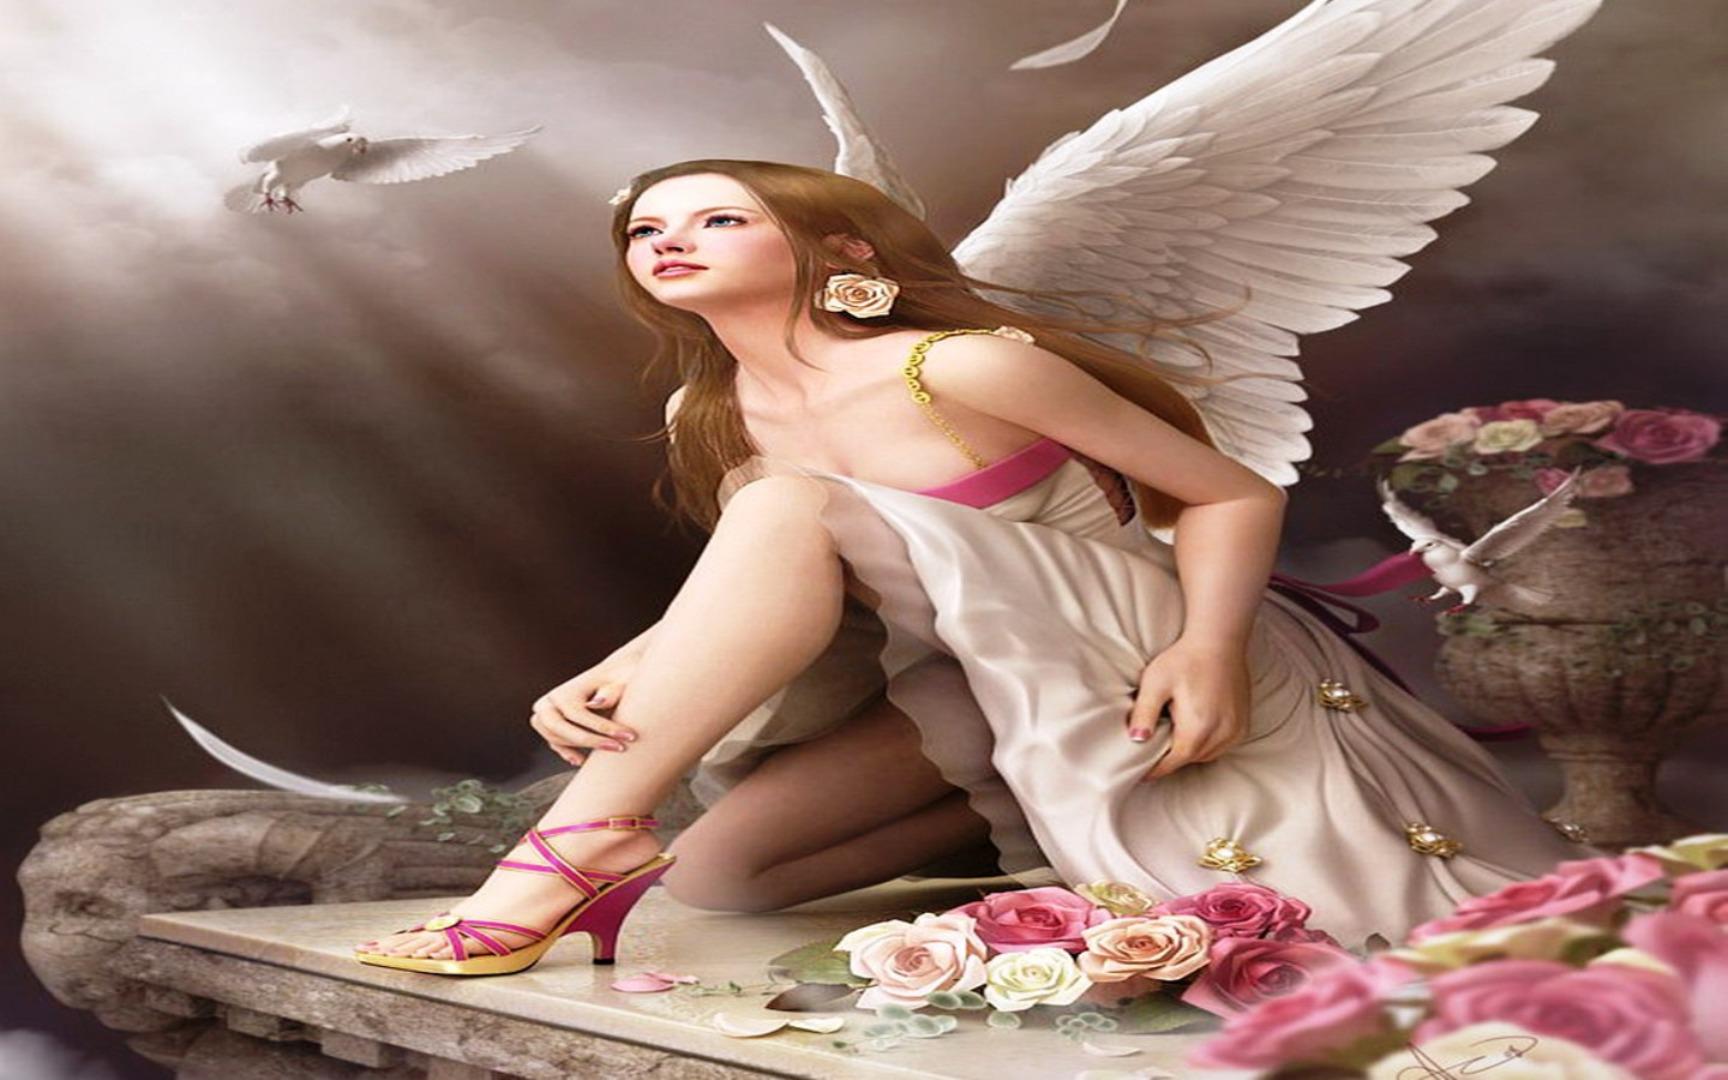 BEAUTIFUL ANGEL WALLPAPER - (#121245) - HD Wallpapers ...